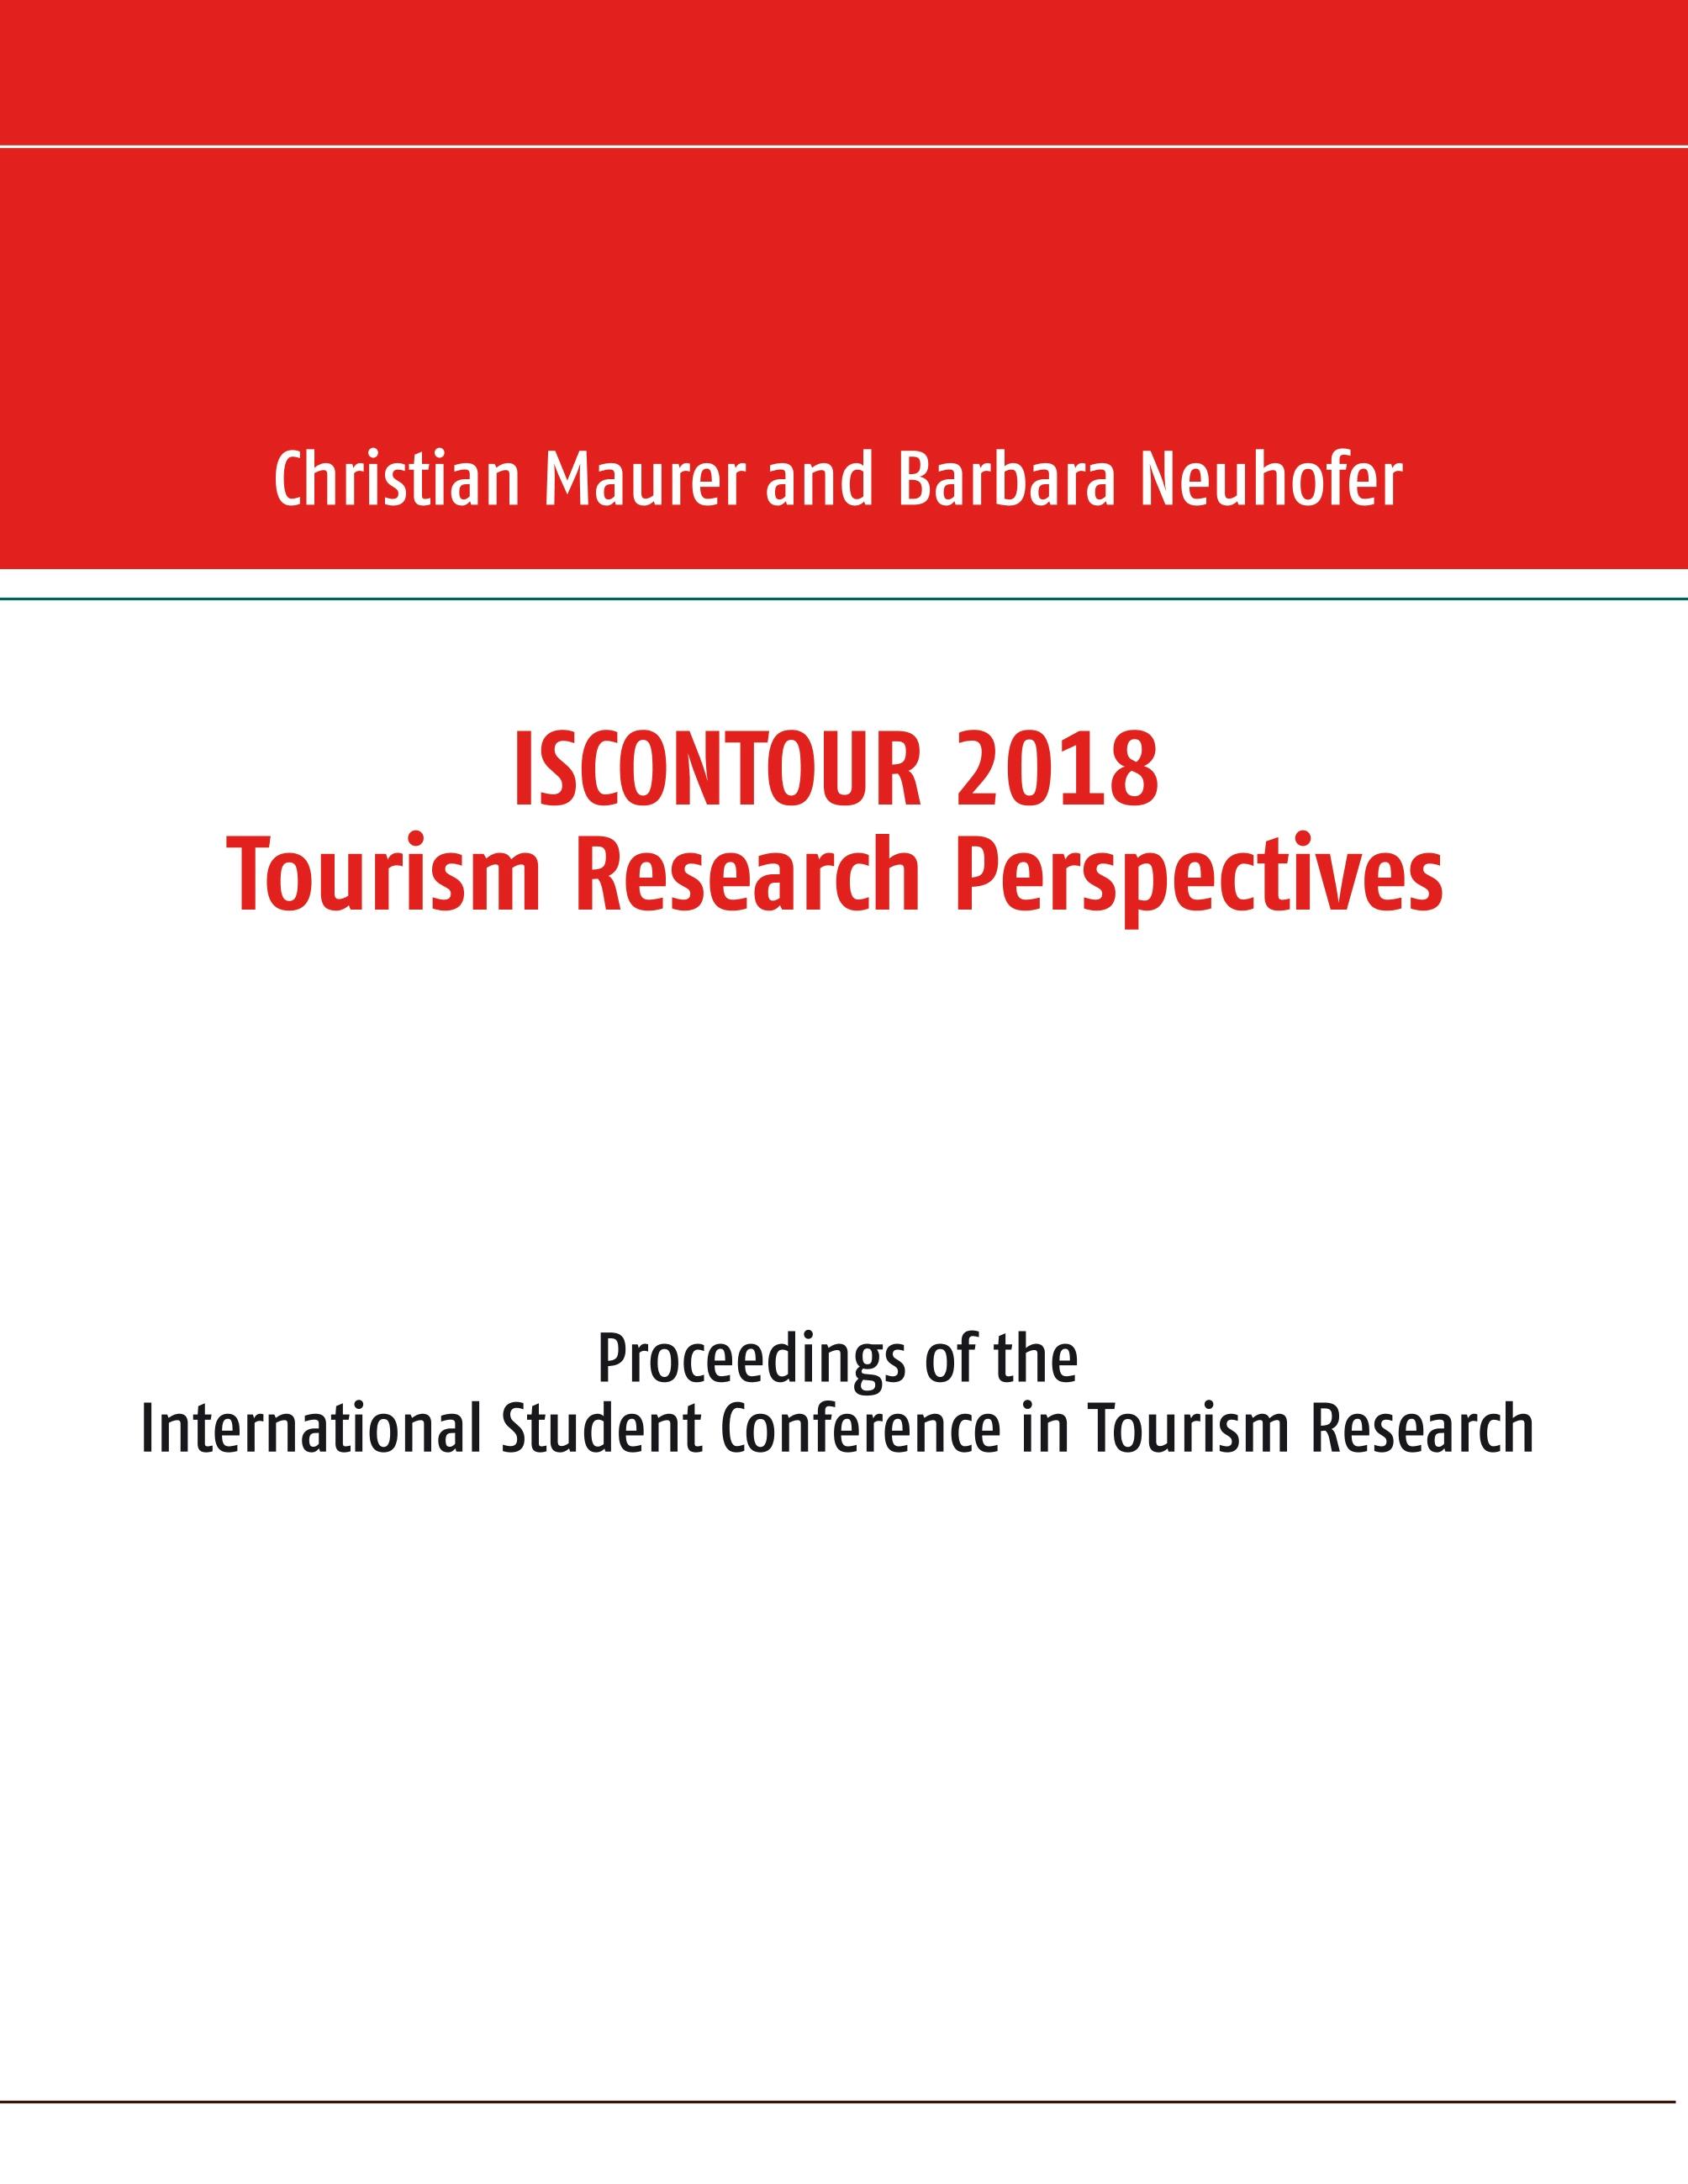 Iscontour 2018 Tourism Research Perspectives - Barbara Neuhofer